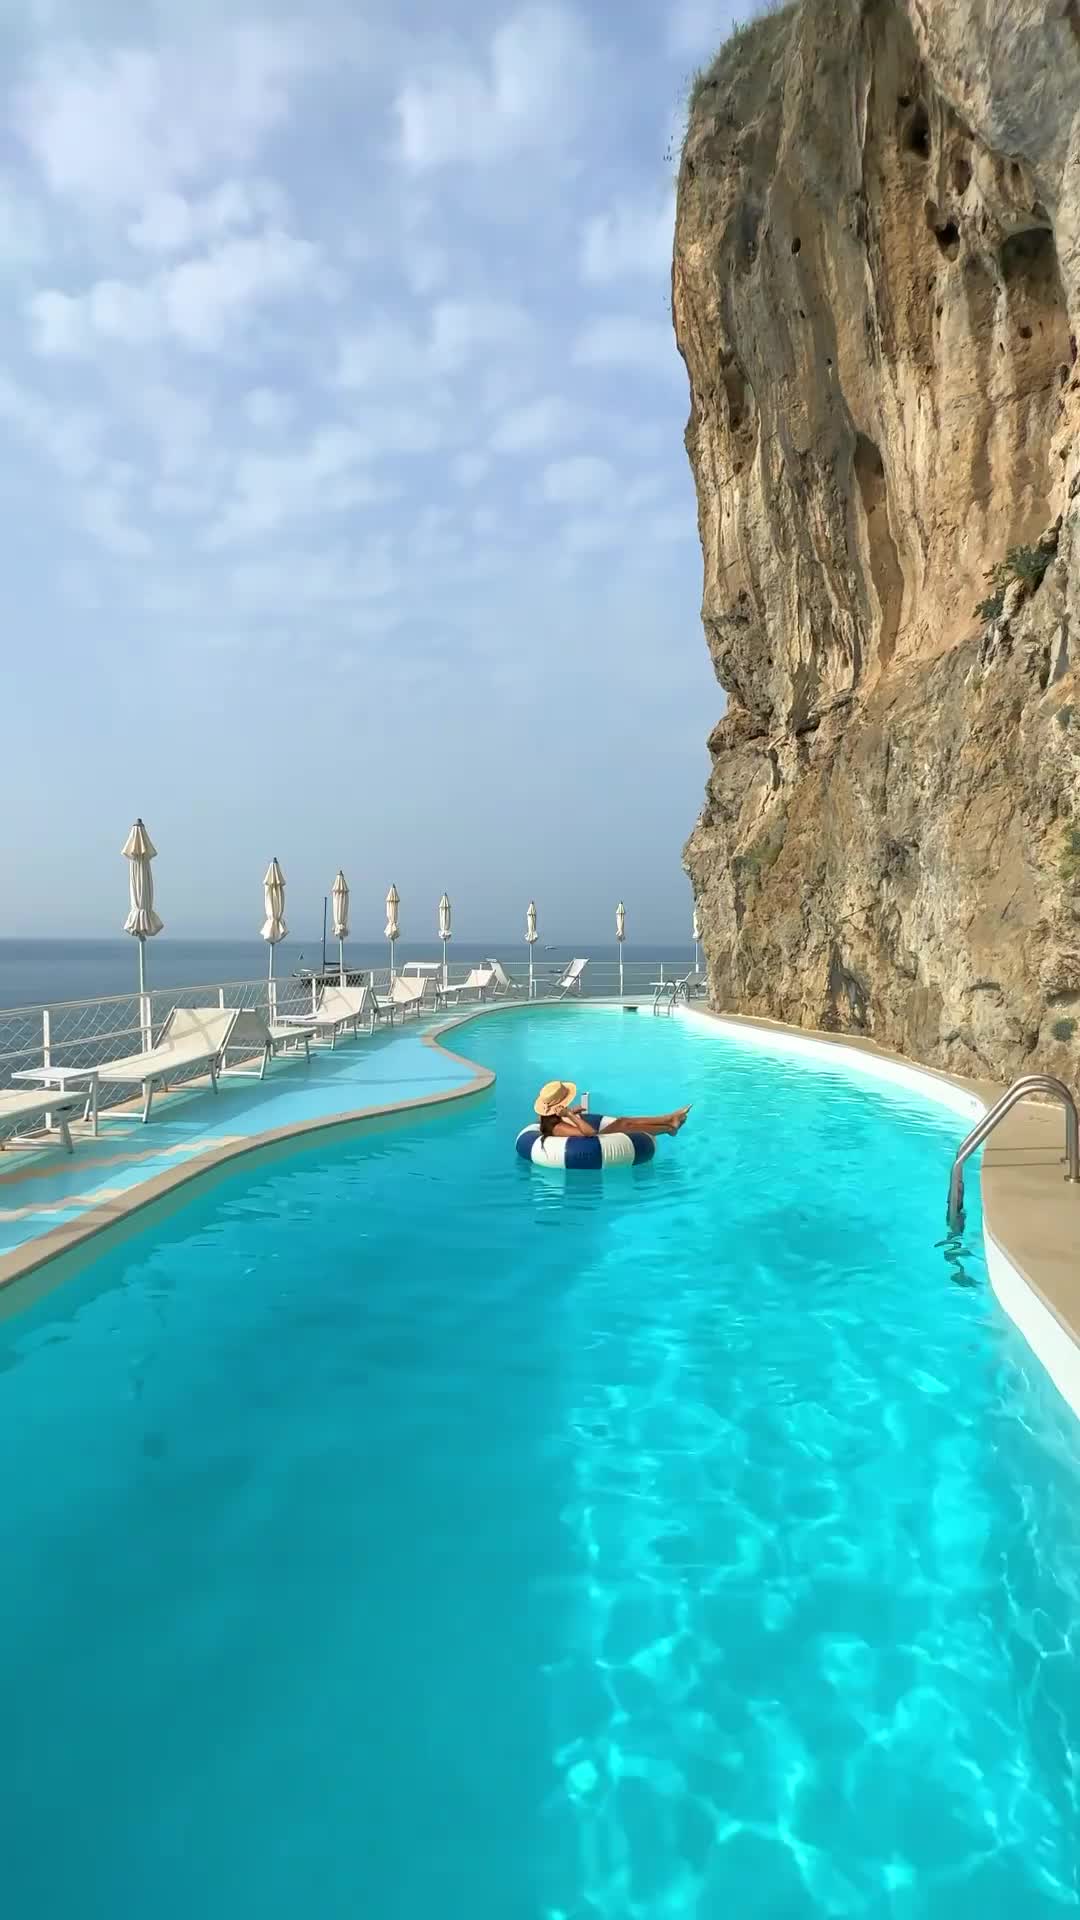 Summer Vibes at Hotel Miramalfi, Amalfi Coast